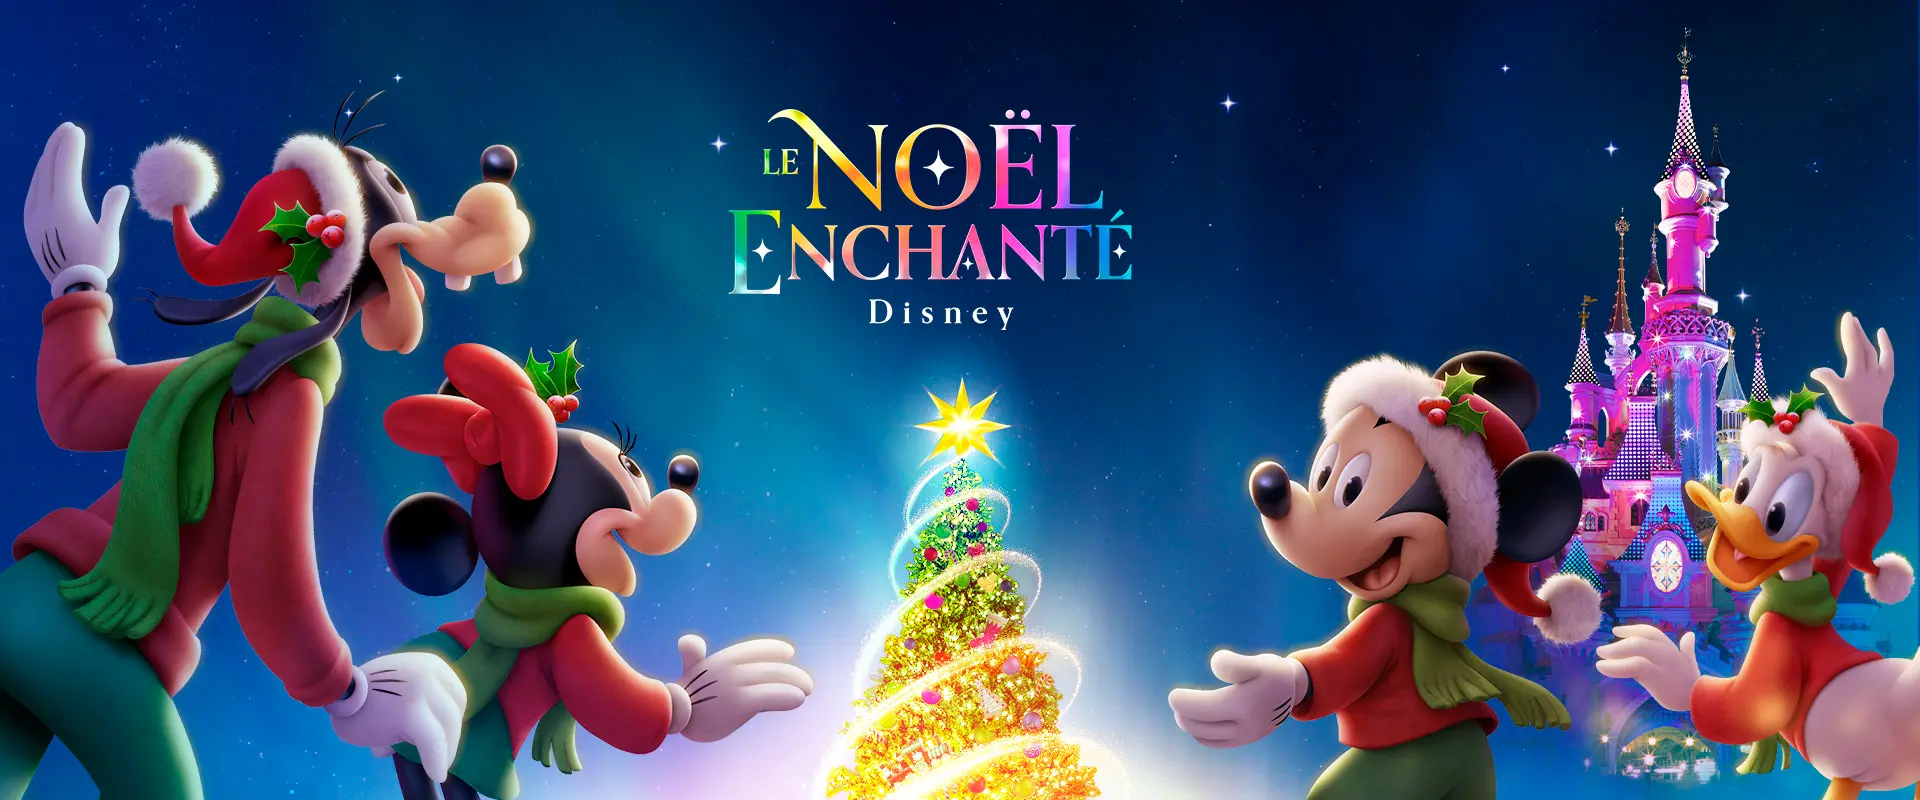 Joyeux Noël svg / mickey Noël / Noel 2019 / Noël cadeau svg / SVG